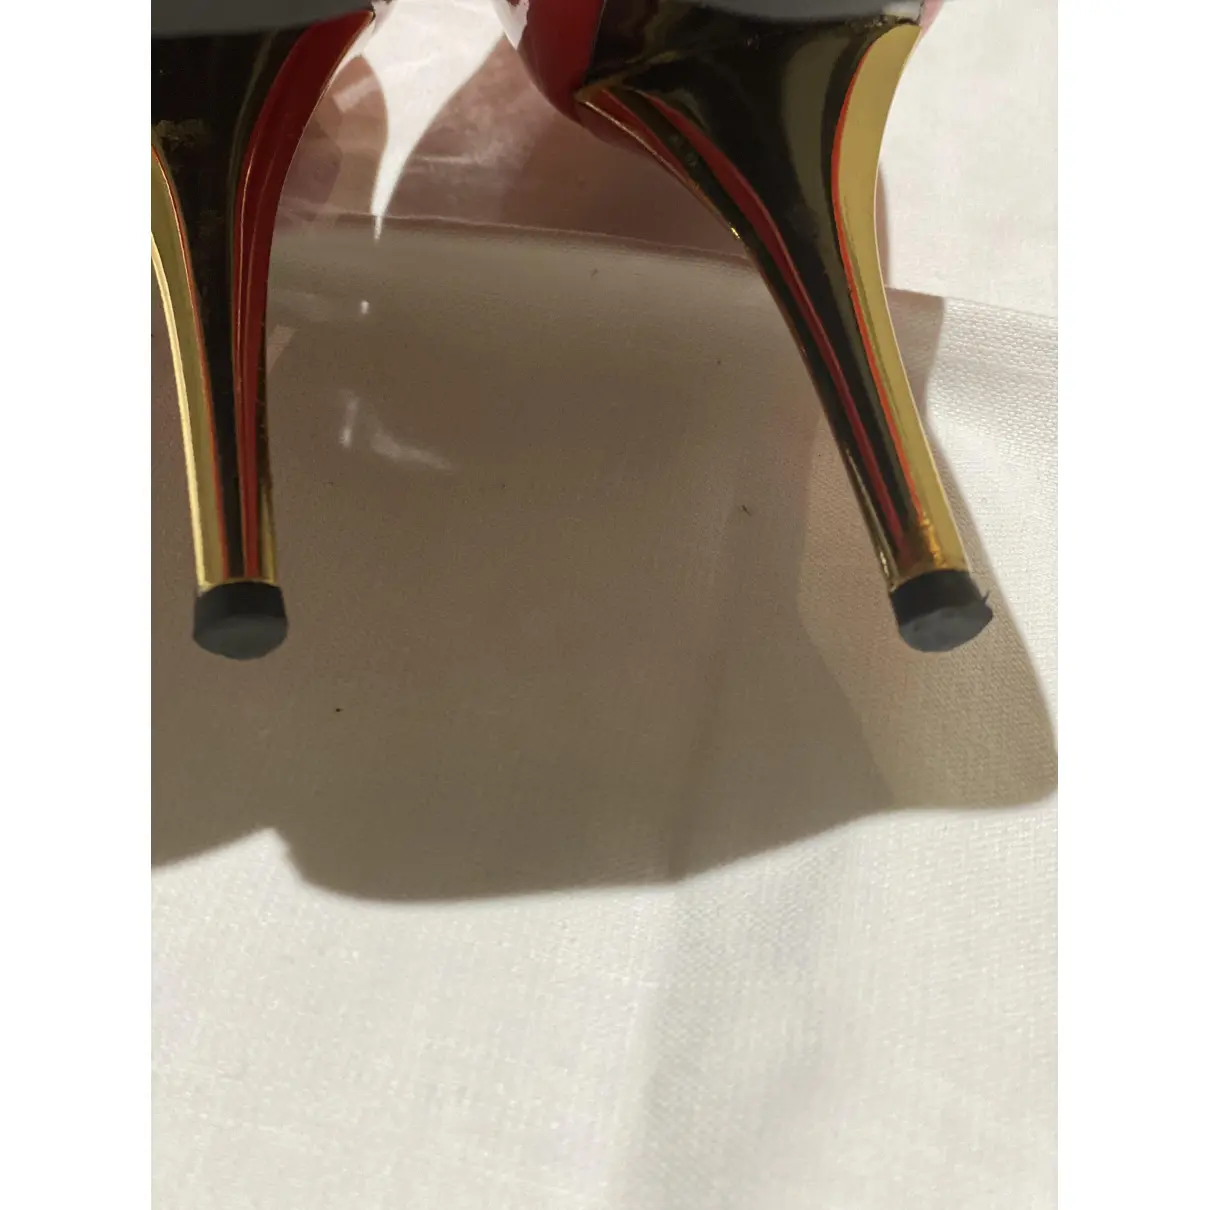 Patent leather heels Yves Saint Laurent